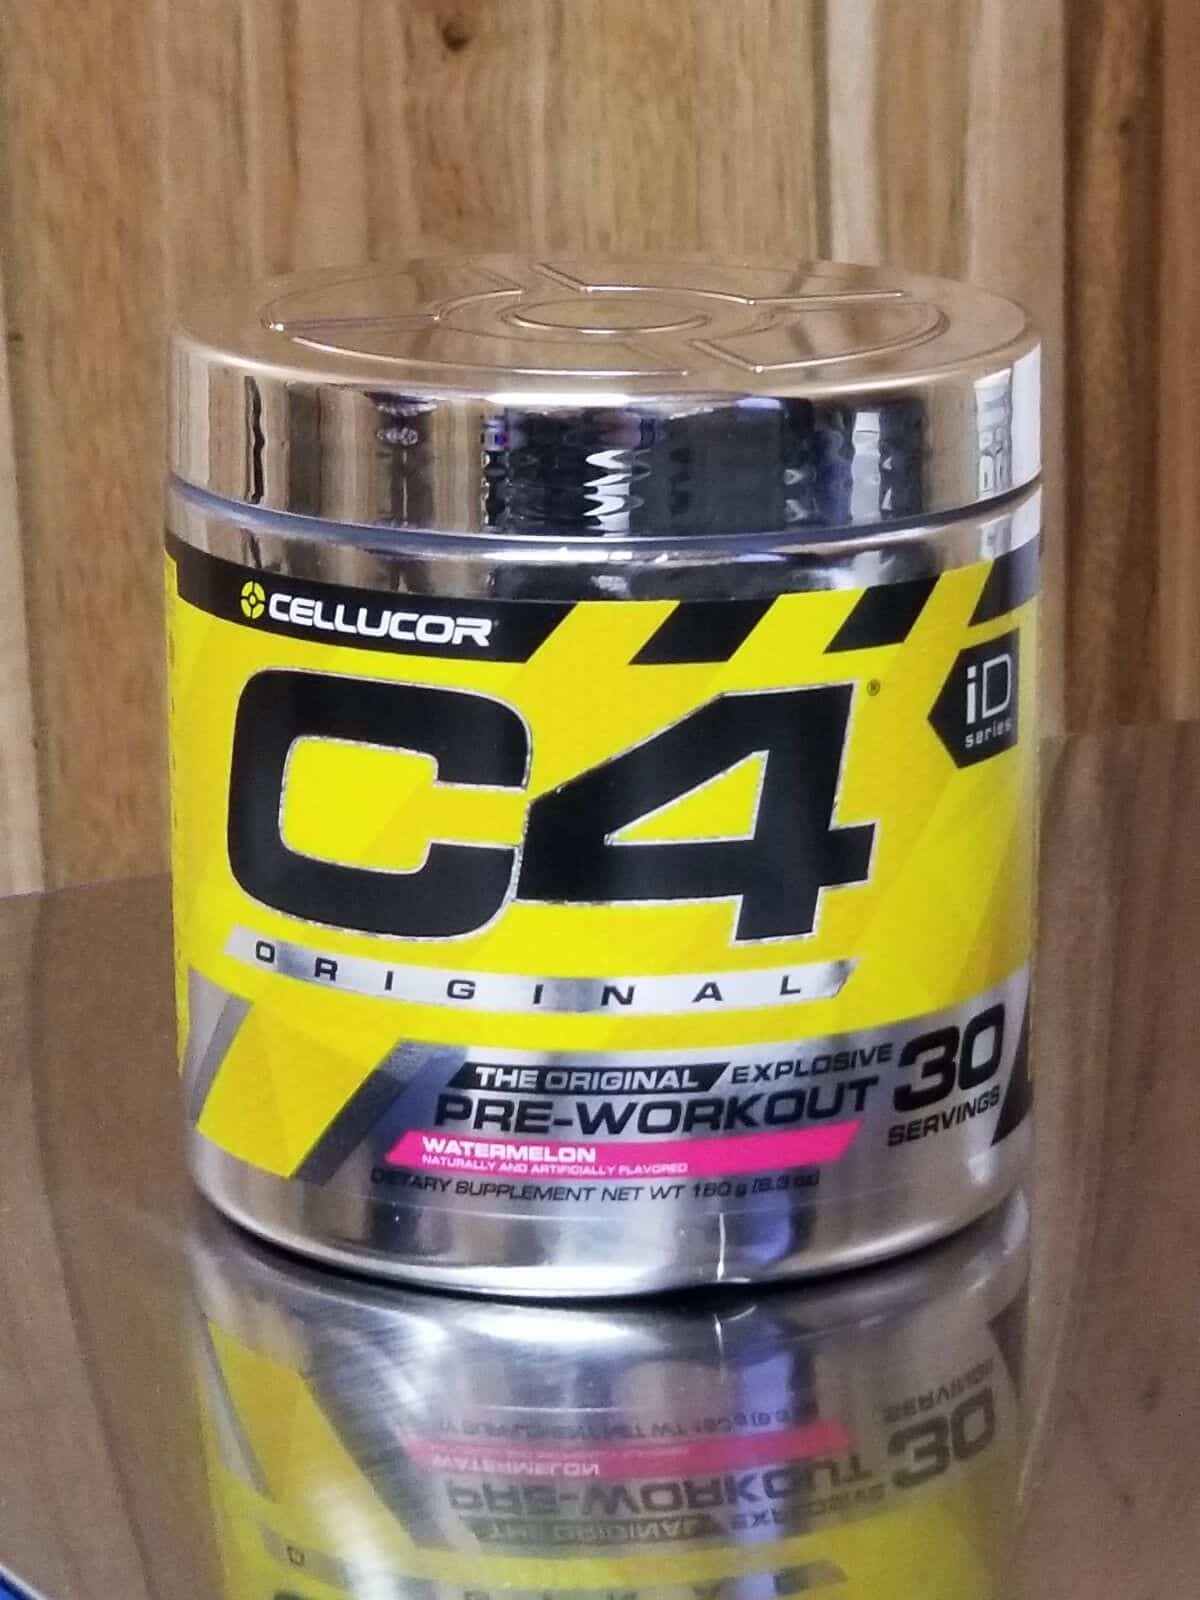 6X Cellucor C4 Original Explosive Pre-Workout 30 Srv Watermelon ID Series 